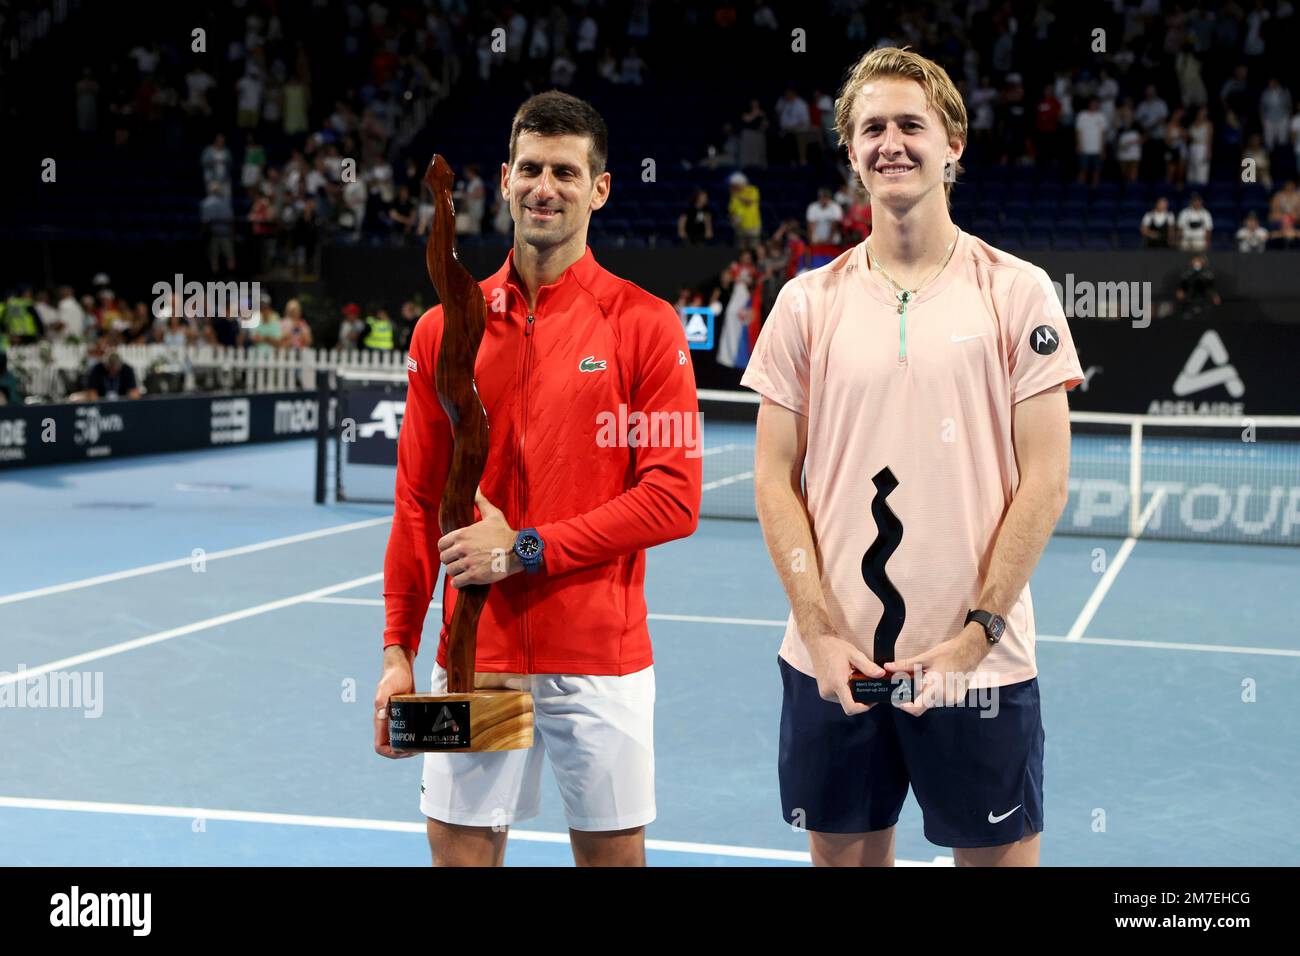 Winner Serbias Novak Djokovic and runner-up USAs Sebastian Korda pose for a photo after the final of the Adelaide International tennis tournament in Adelaide, Australia, Sunday, Jan